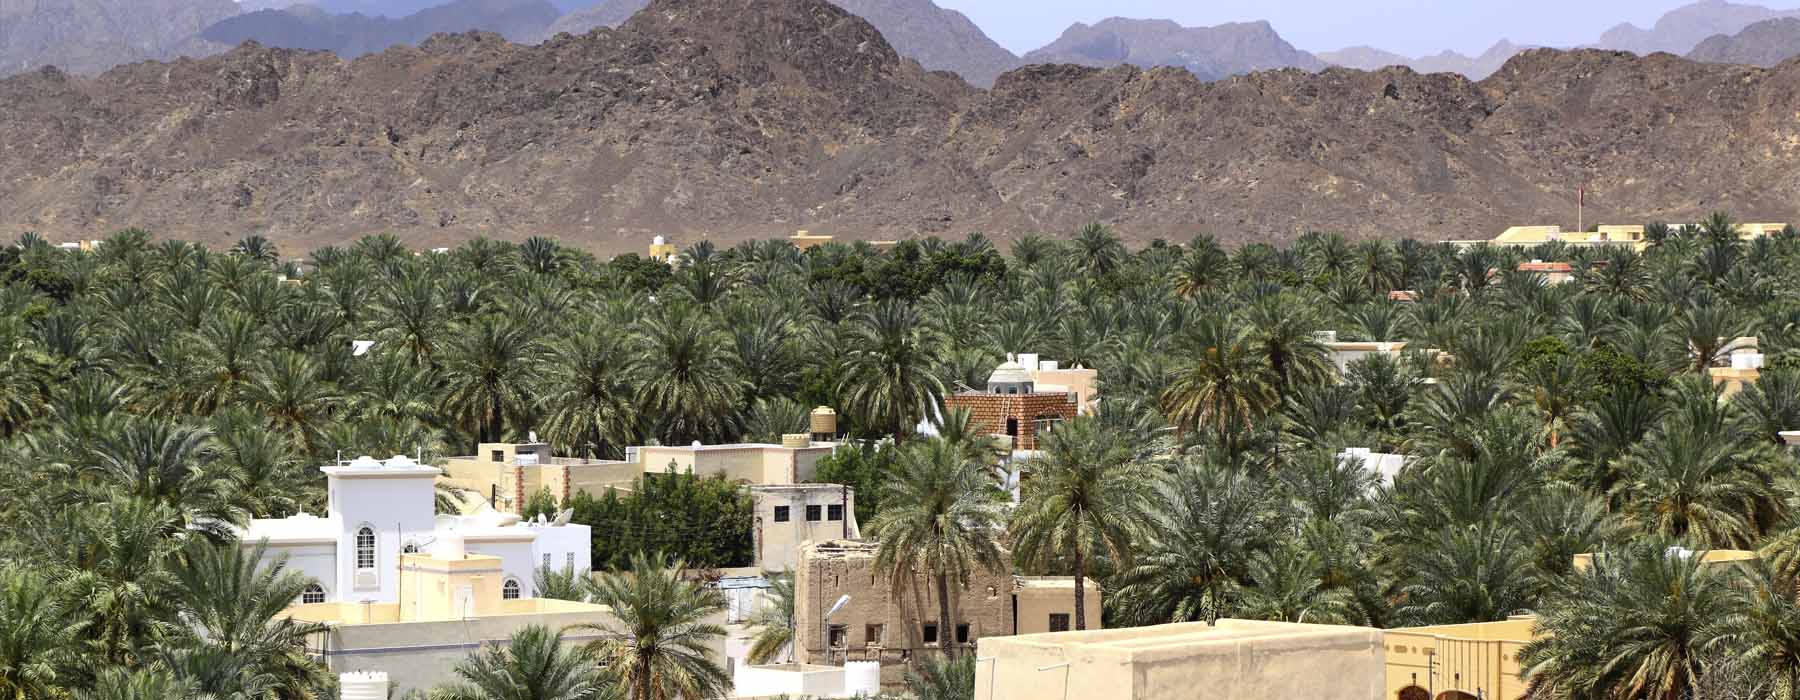 Oman<br class="hidden-md hidden-lg" /> Family Christmas Holidays